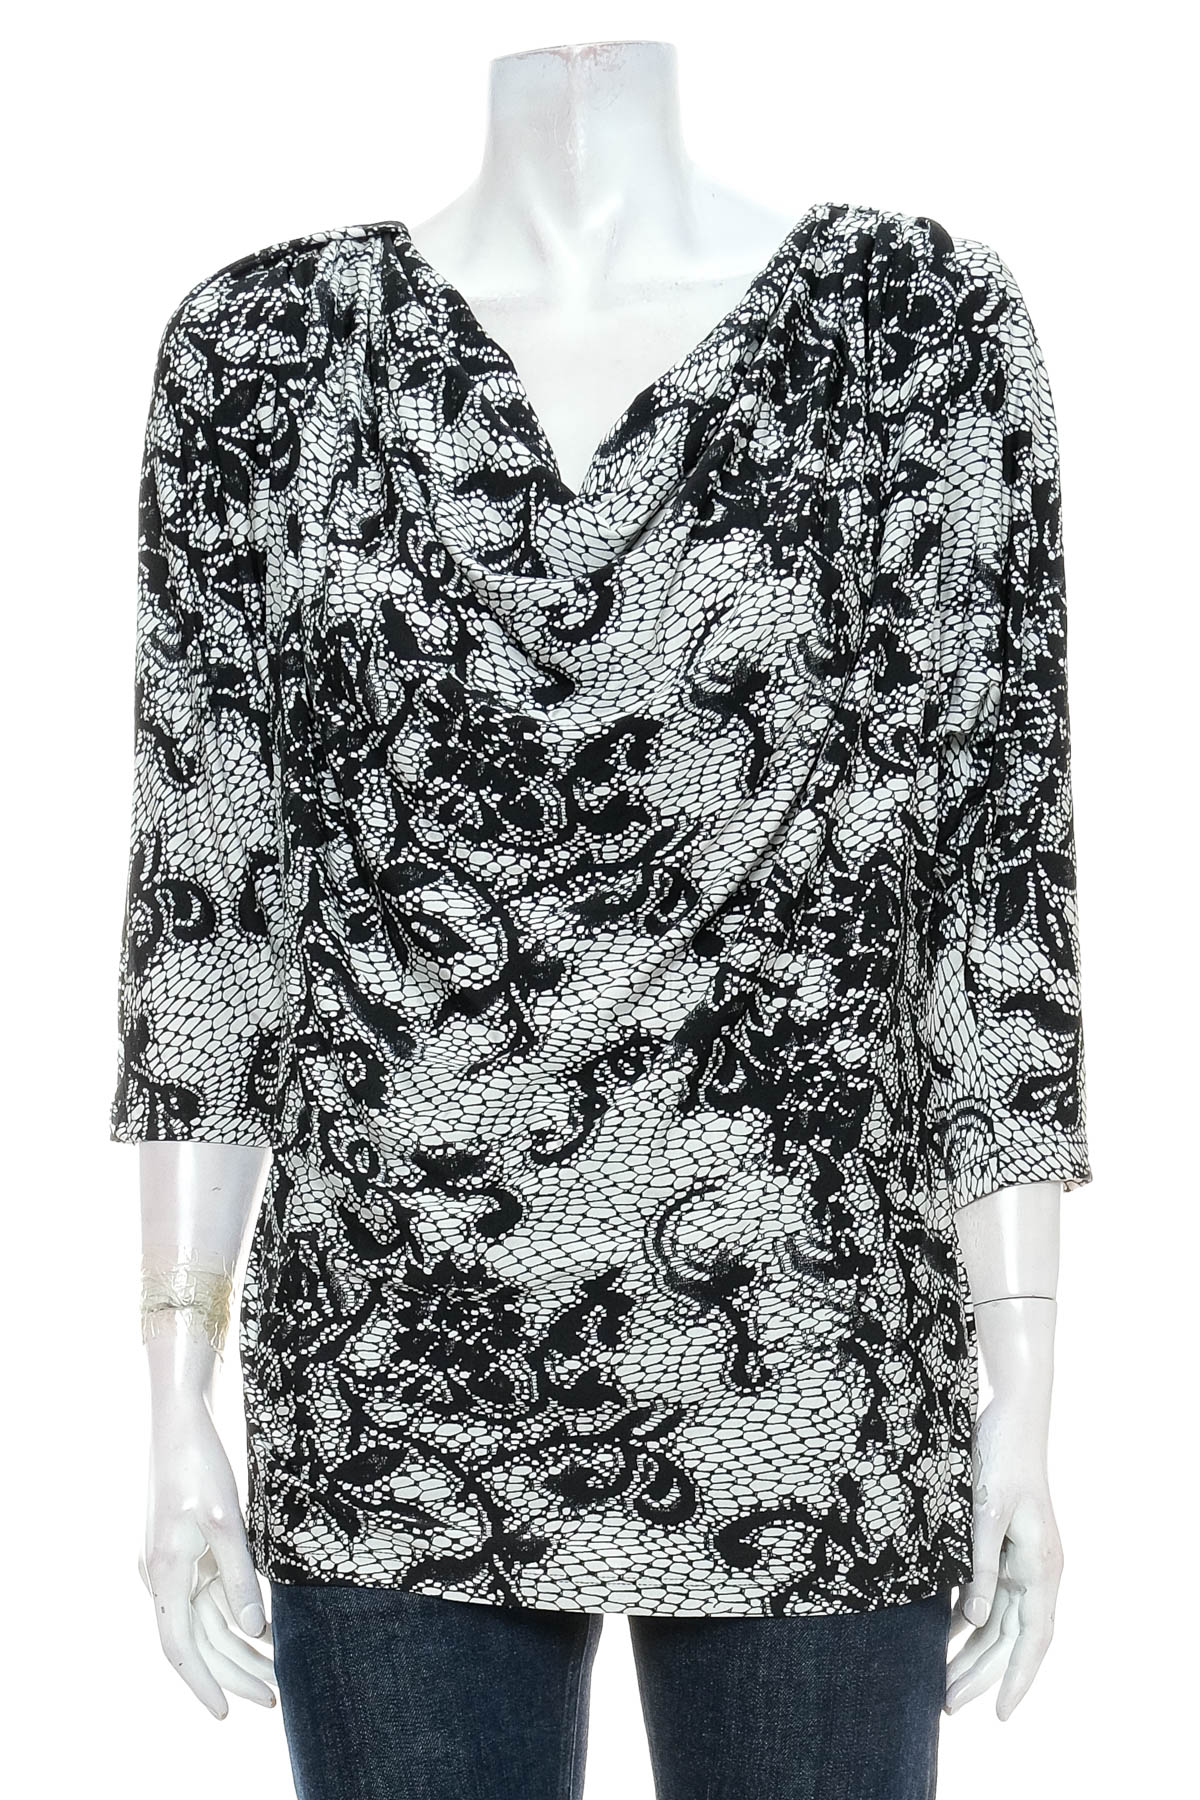 Women's blouse - Bexleys - 0